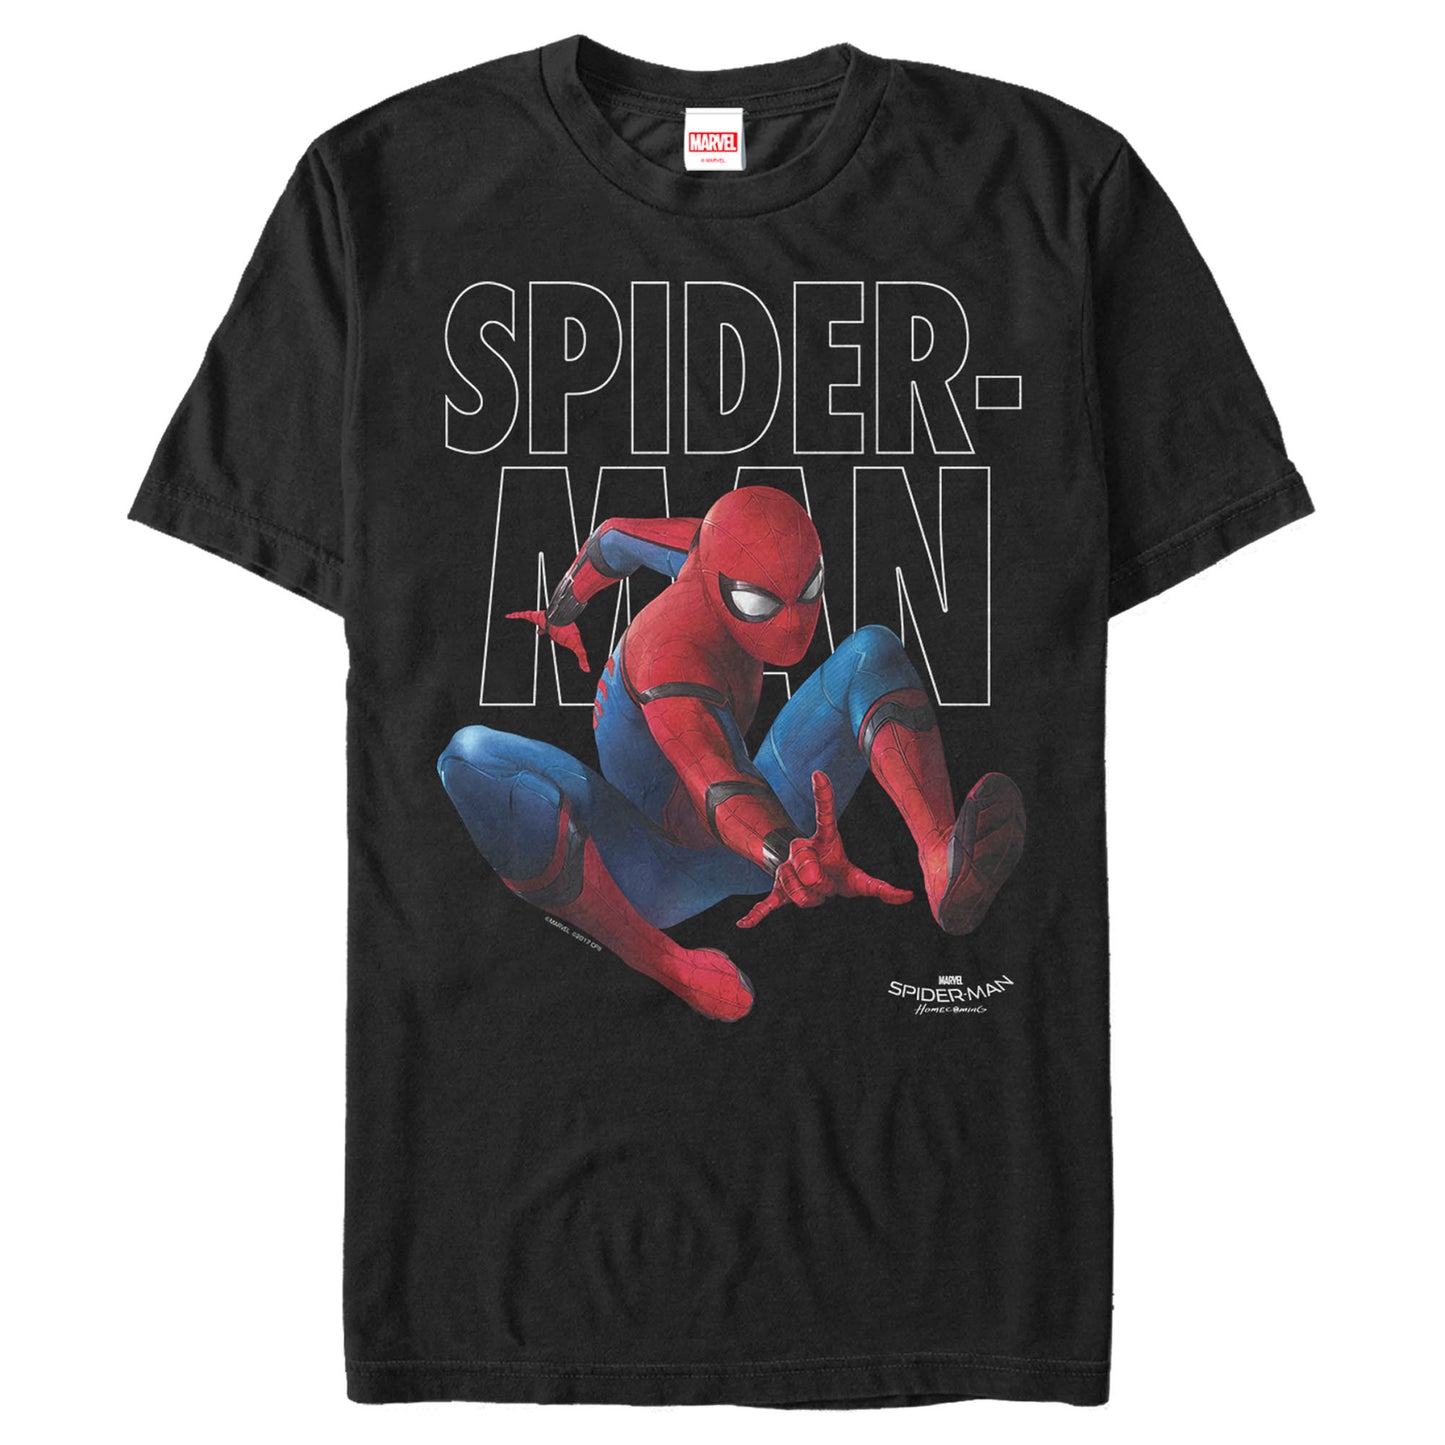 Men's Marvel Active Spiderman T-Shirt